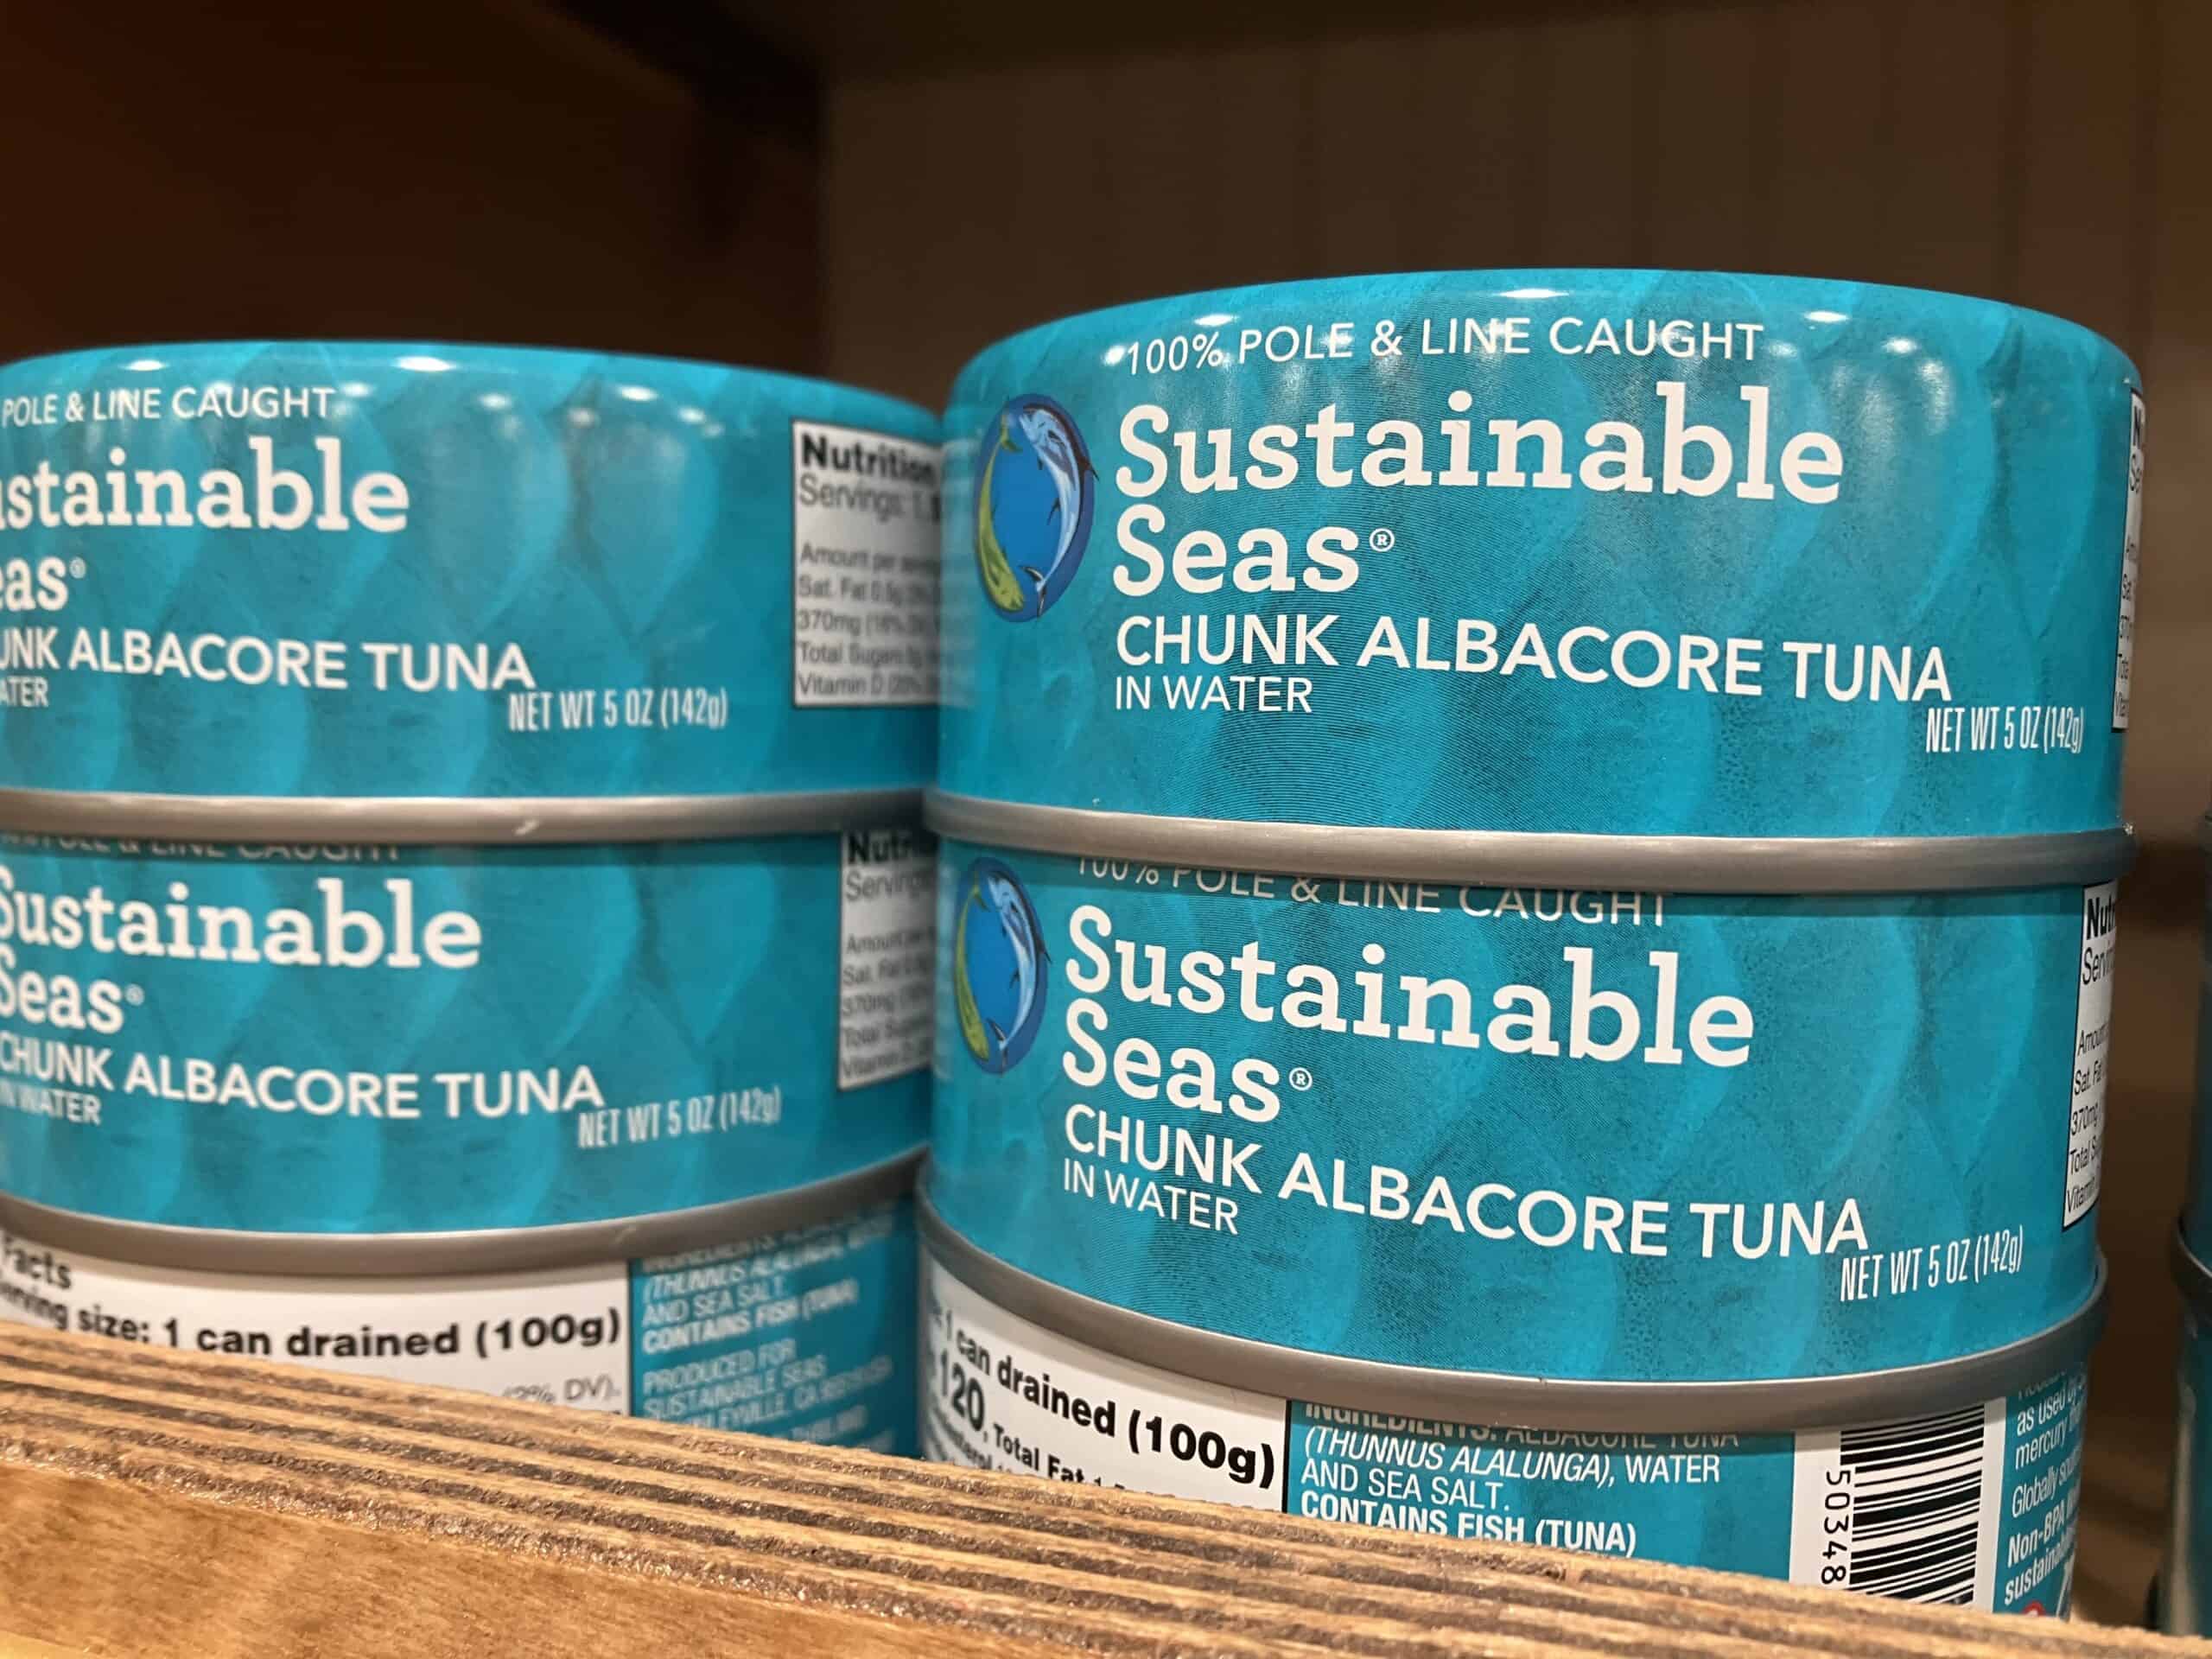 Sustainable Seas albacore tuna